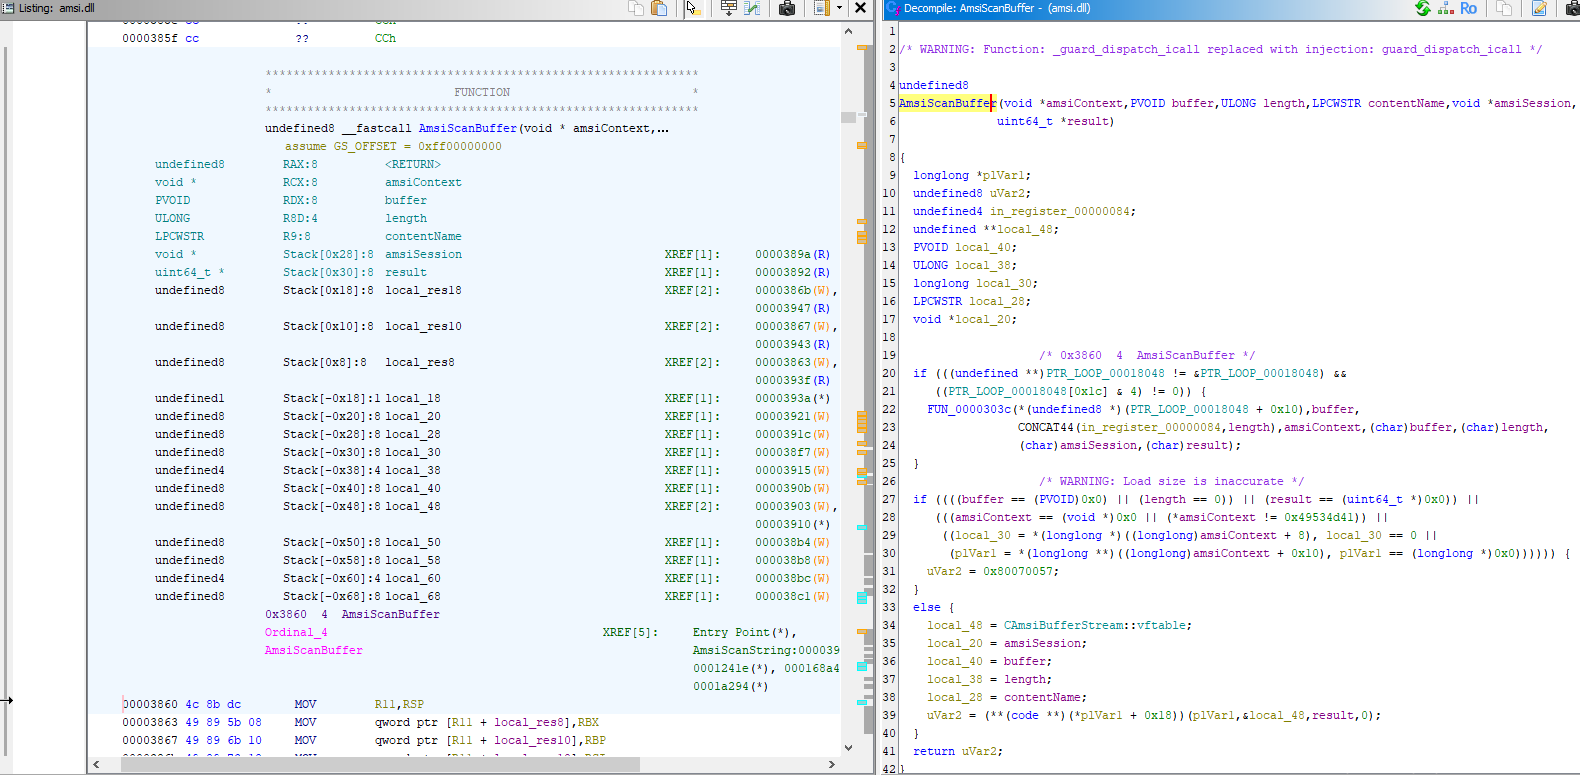 Ghidra Screenshot - AmsiScanBuffer function decompiled